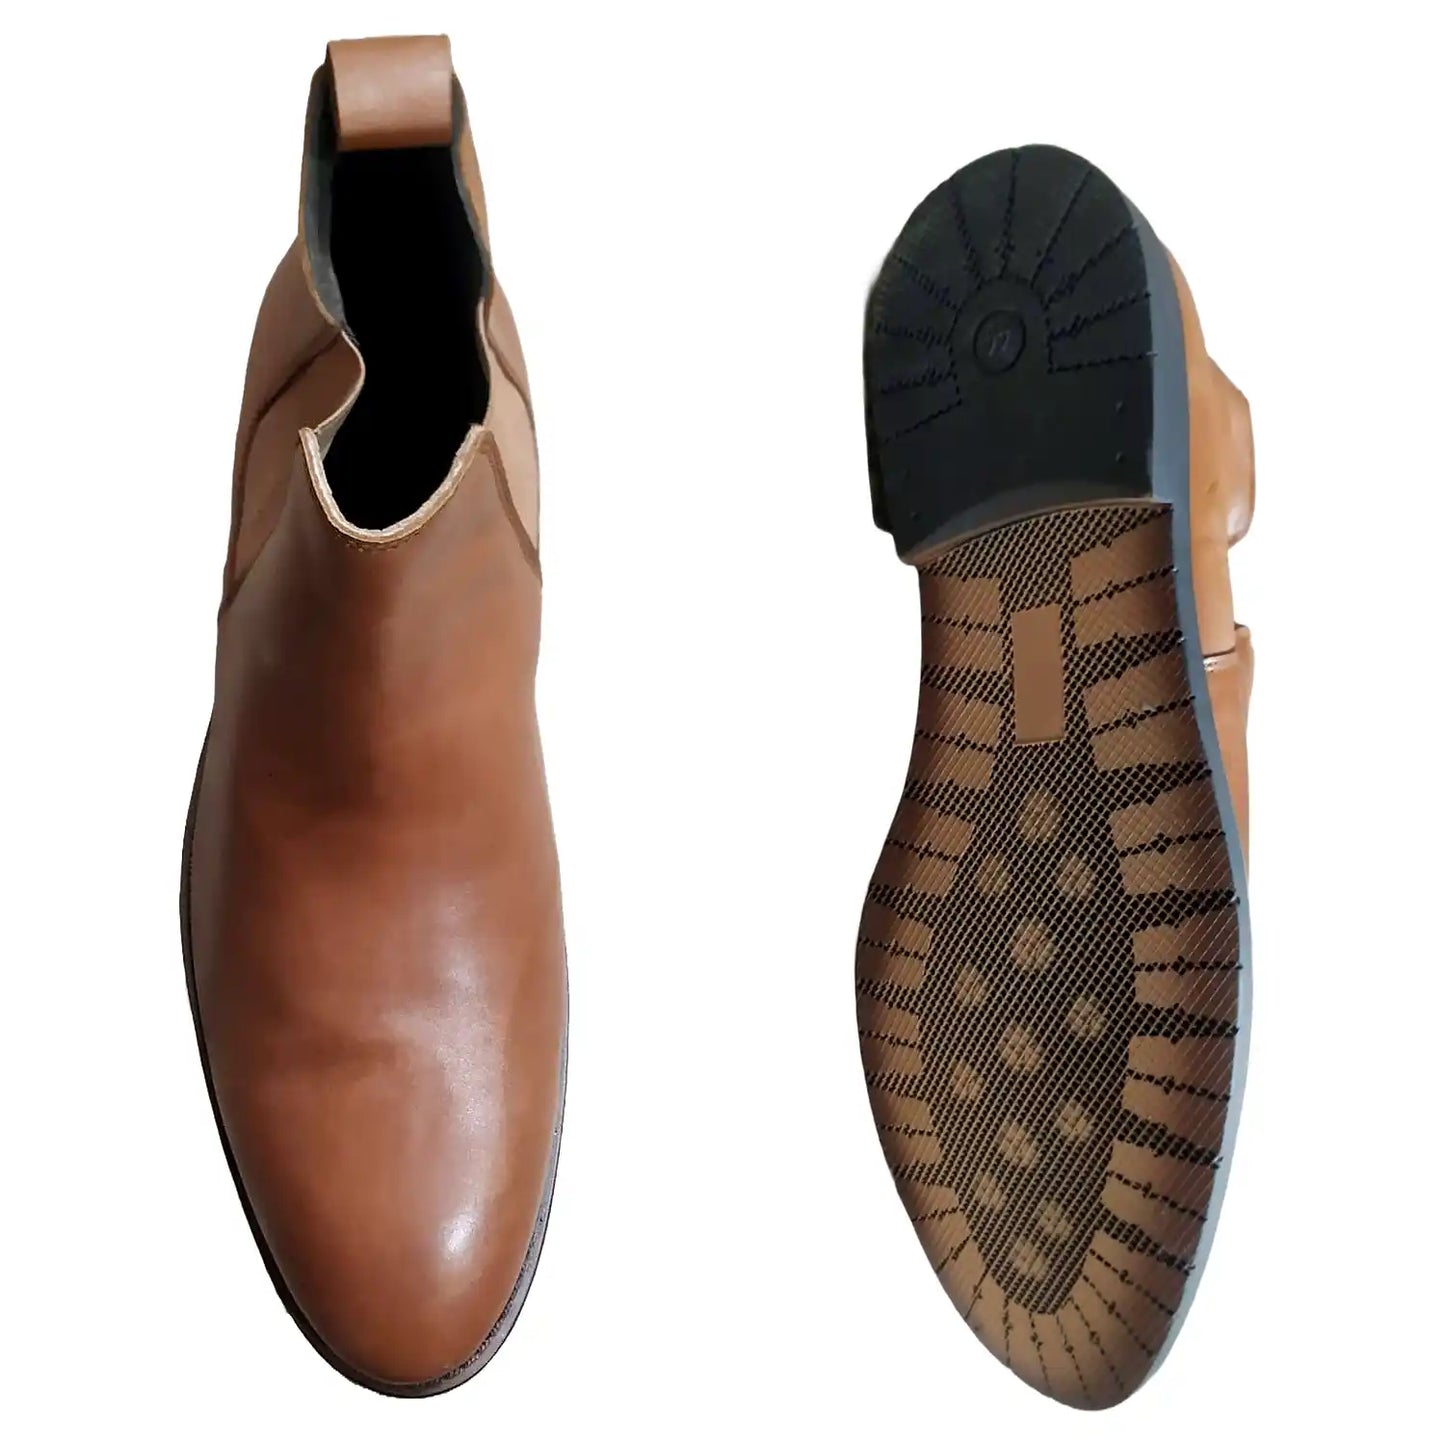 Men's Chelsea Pure Leather (Full Grain) Boots